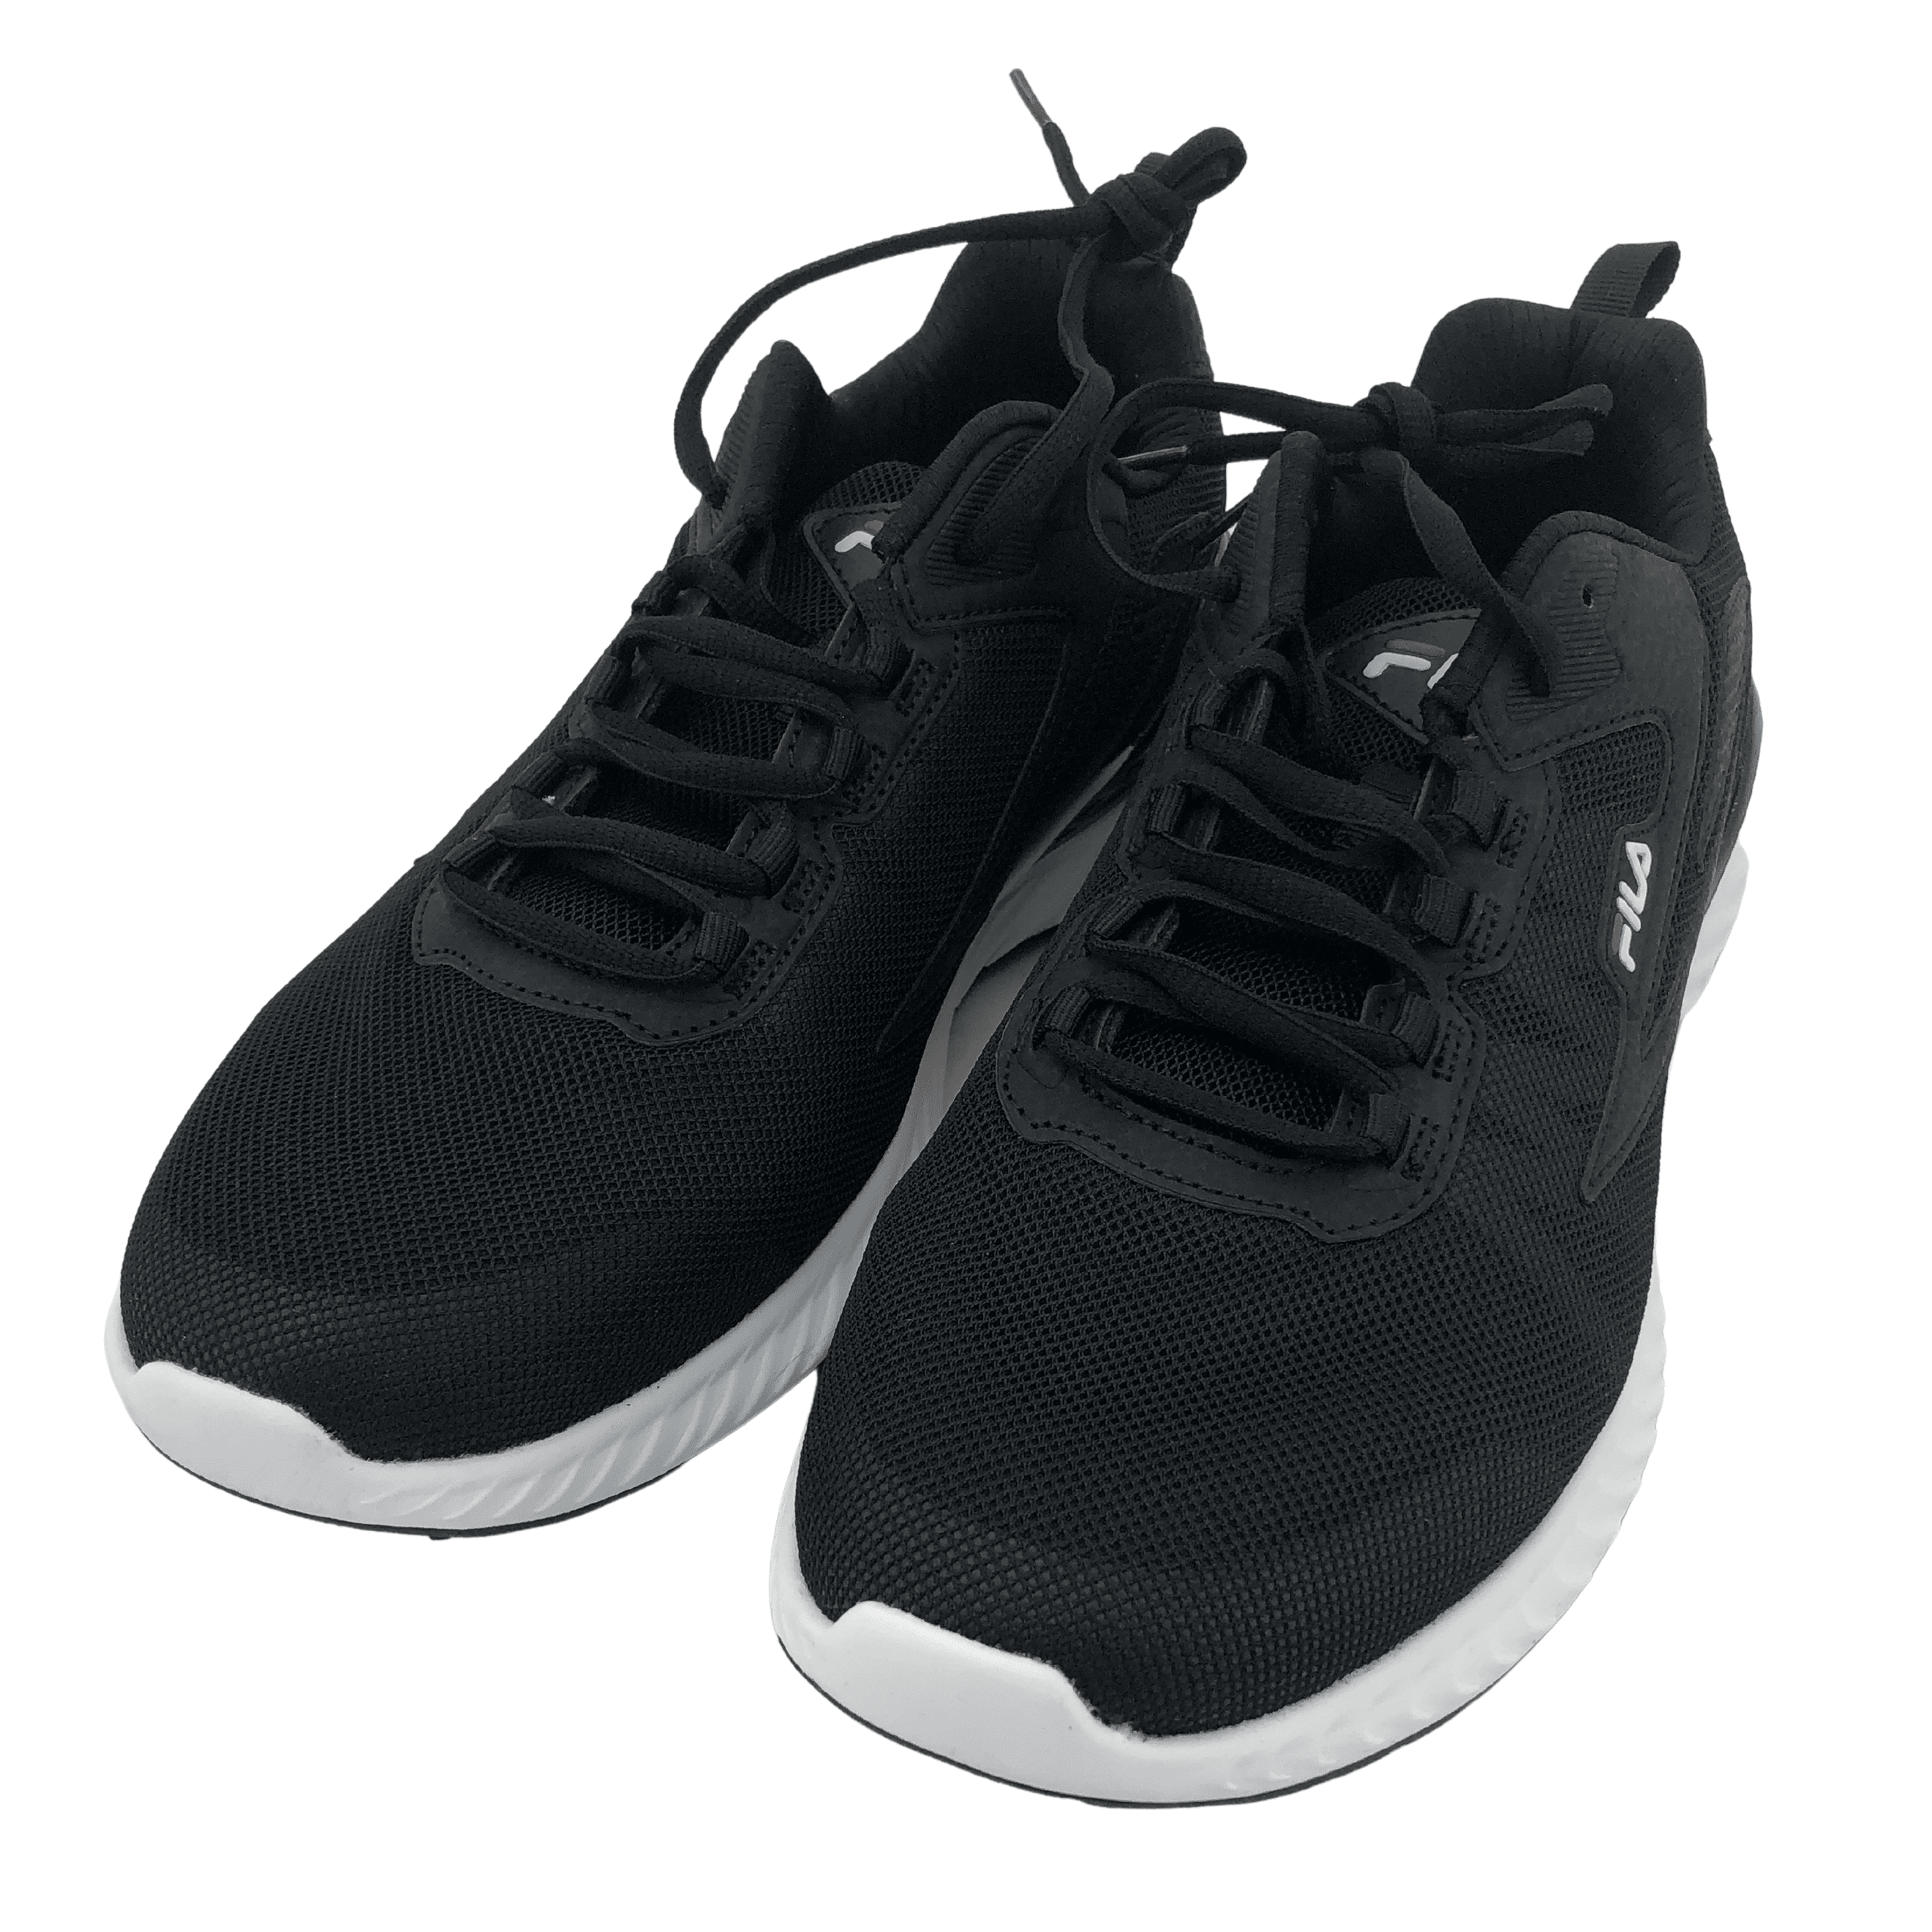 Fila Men's Running Shoes / Trazoros Energized 2 / Black & White / Various Sizes